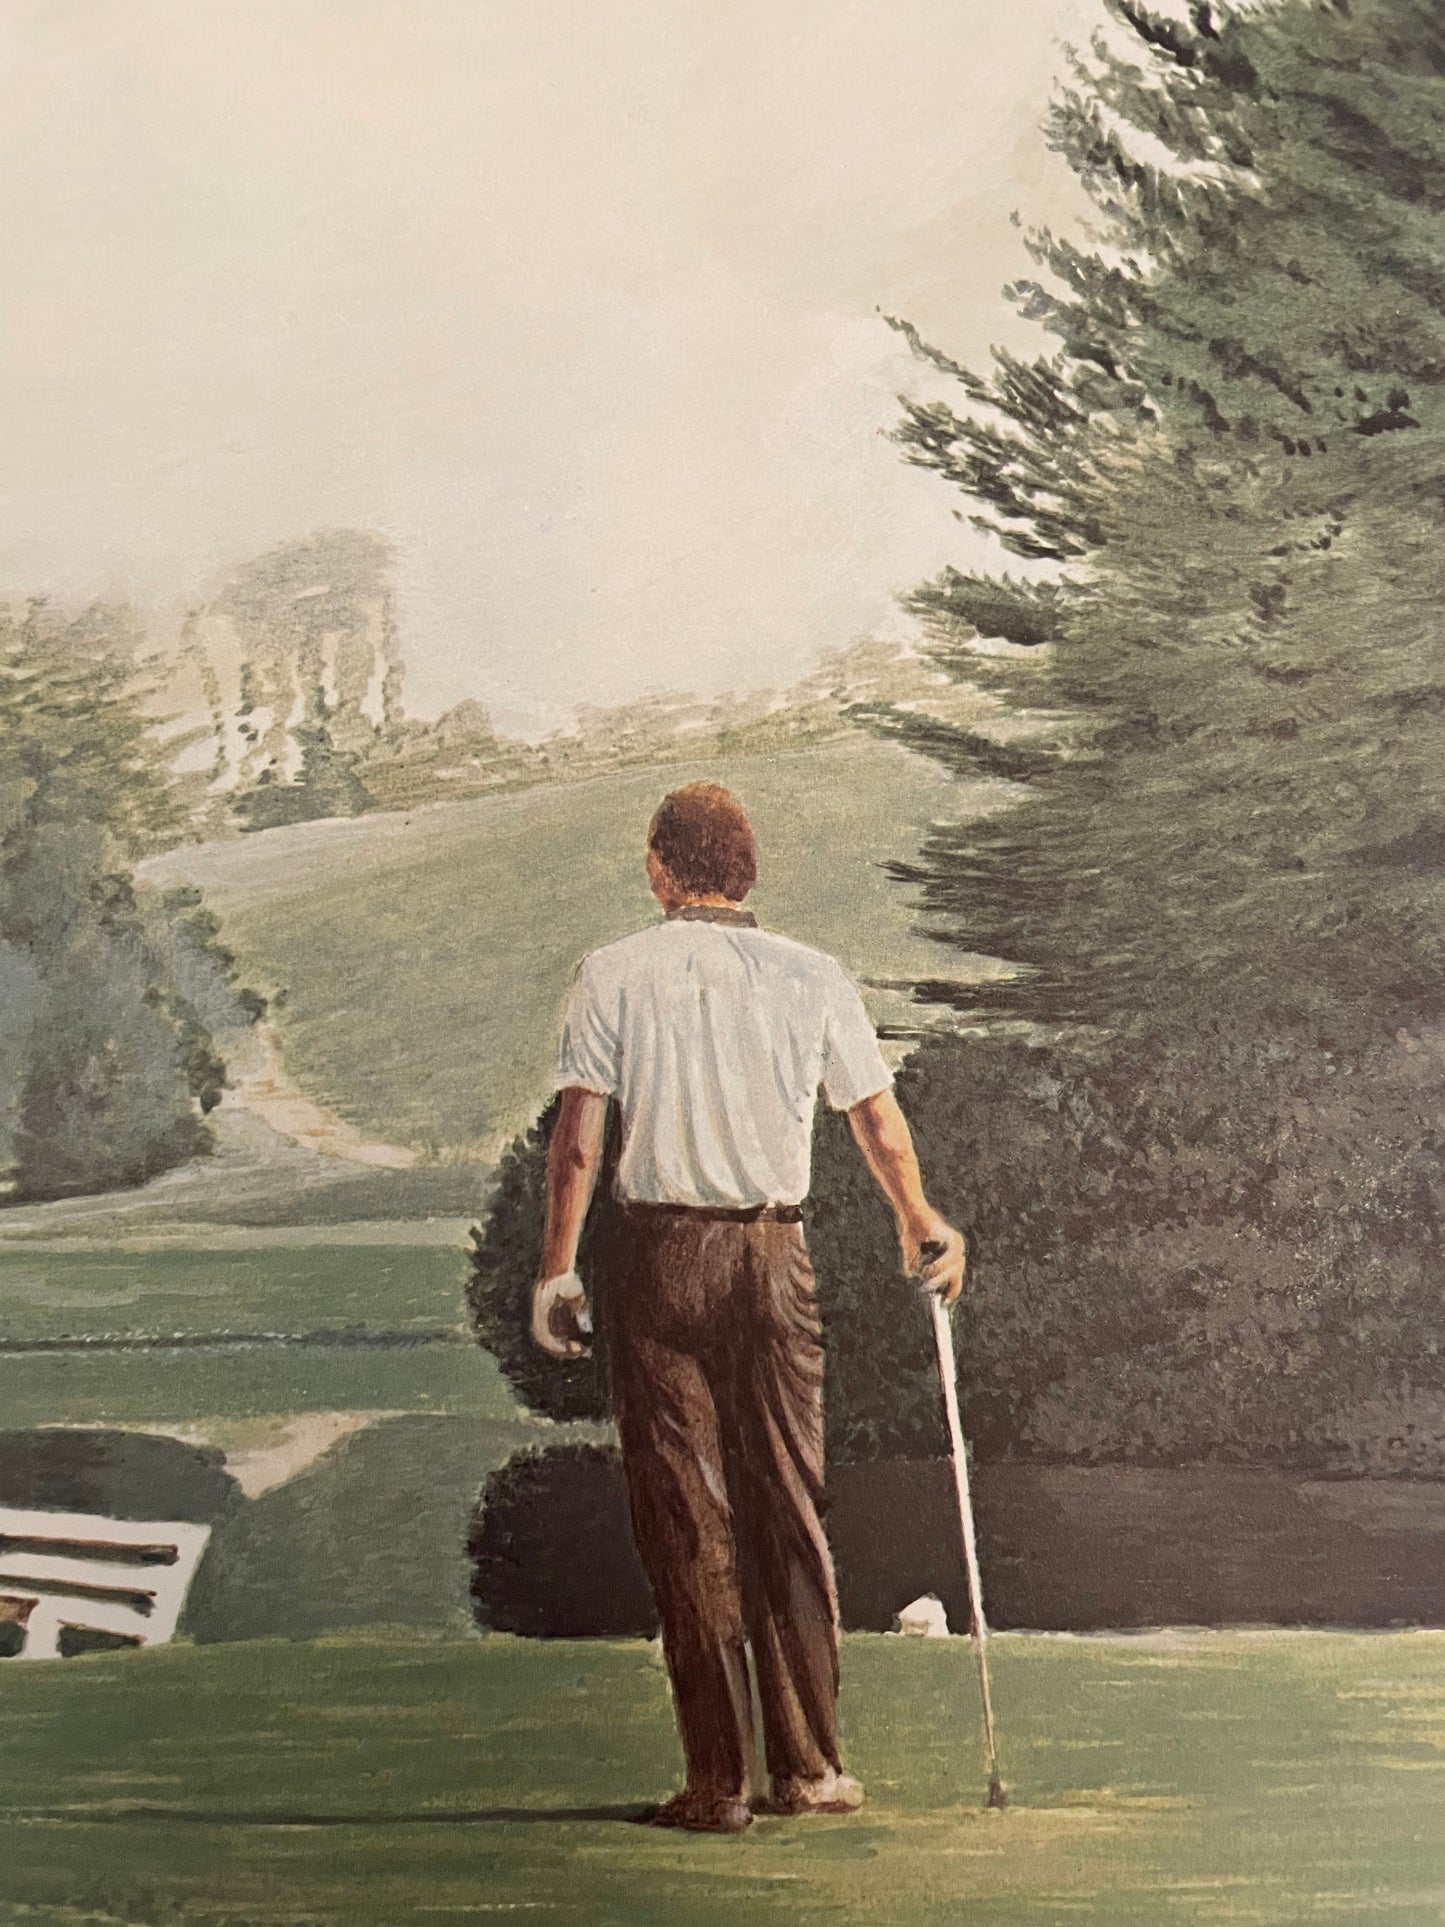 R.E. Renmark - Golf Art print #1